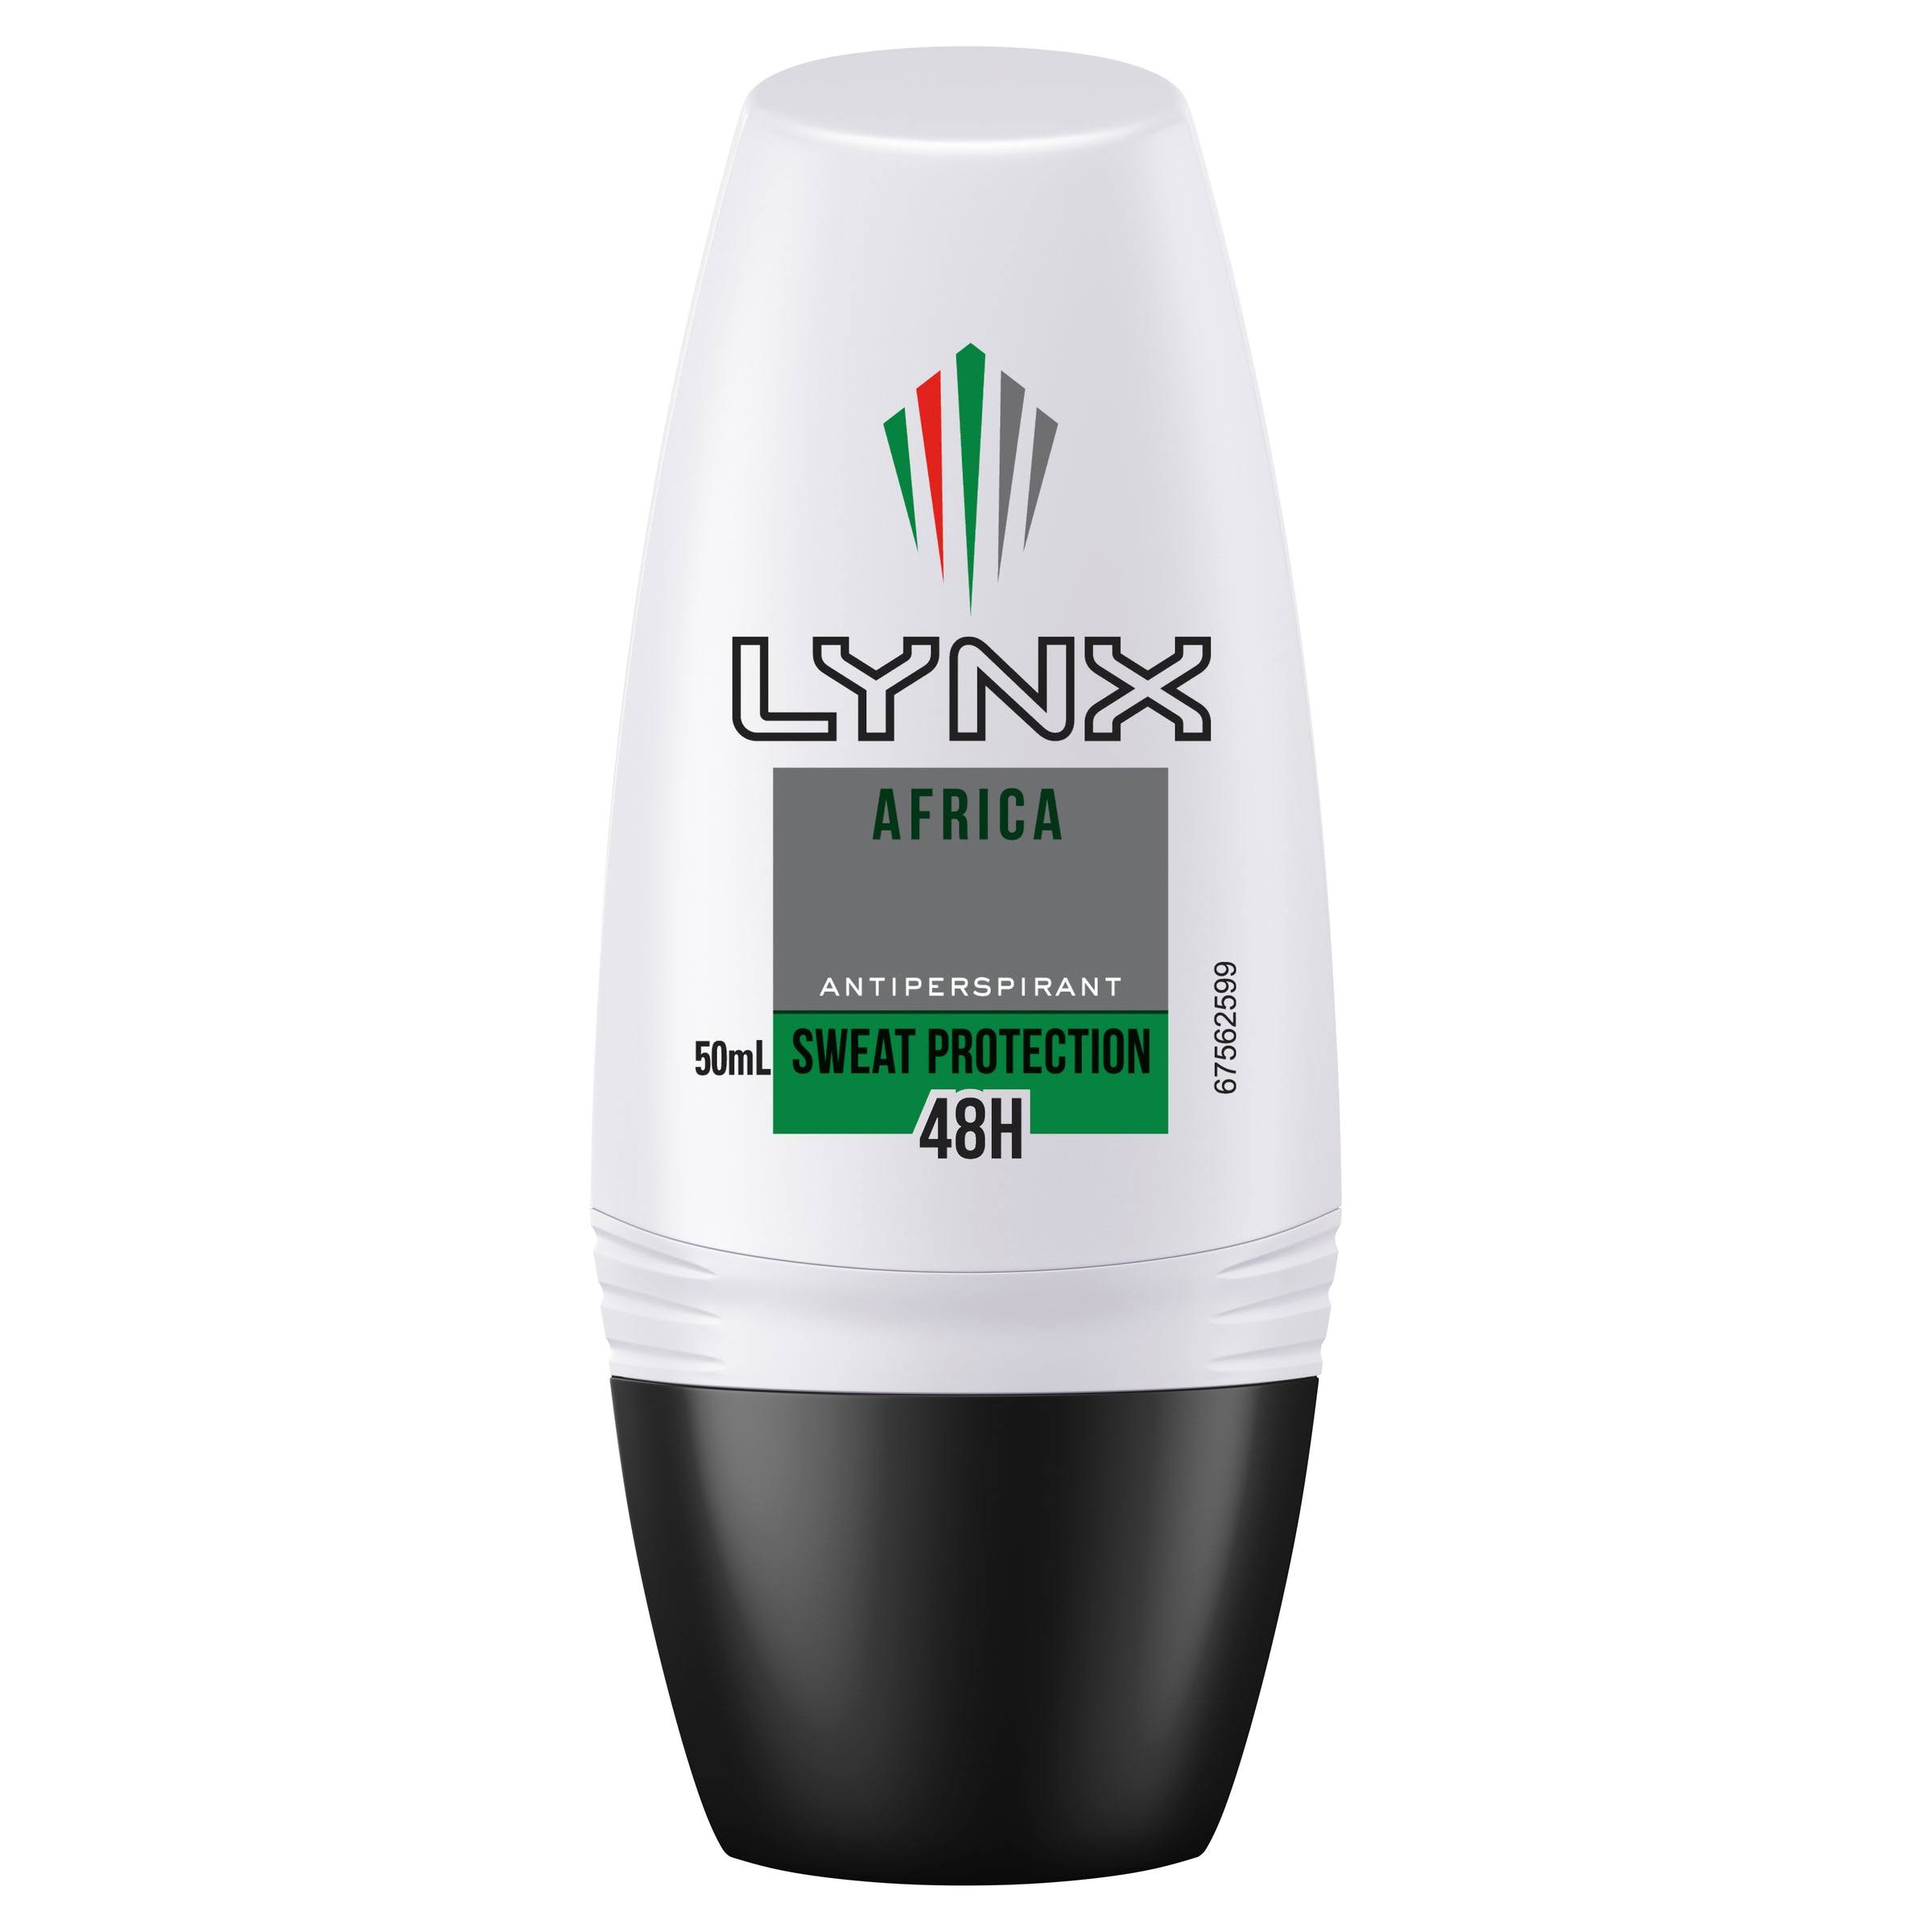 Lynx Africa Anti Perspirant Deodorant Roll On - 50ml